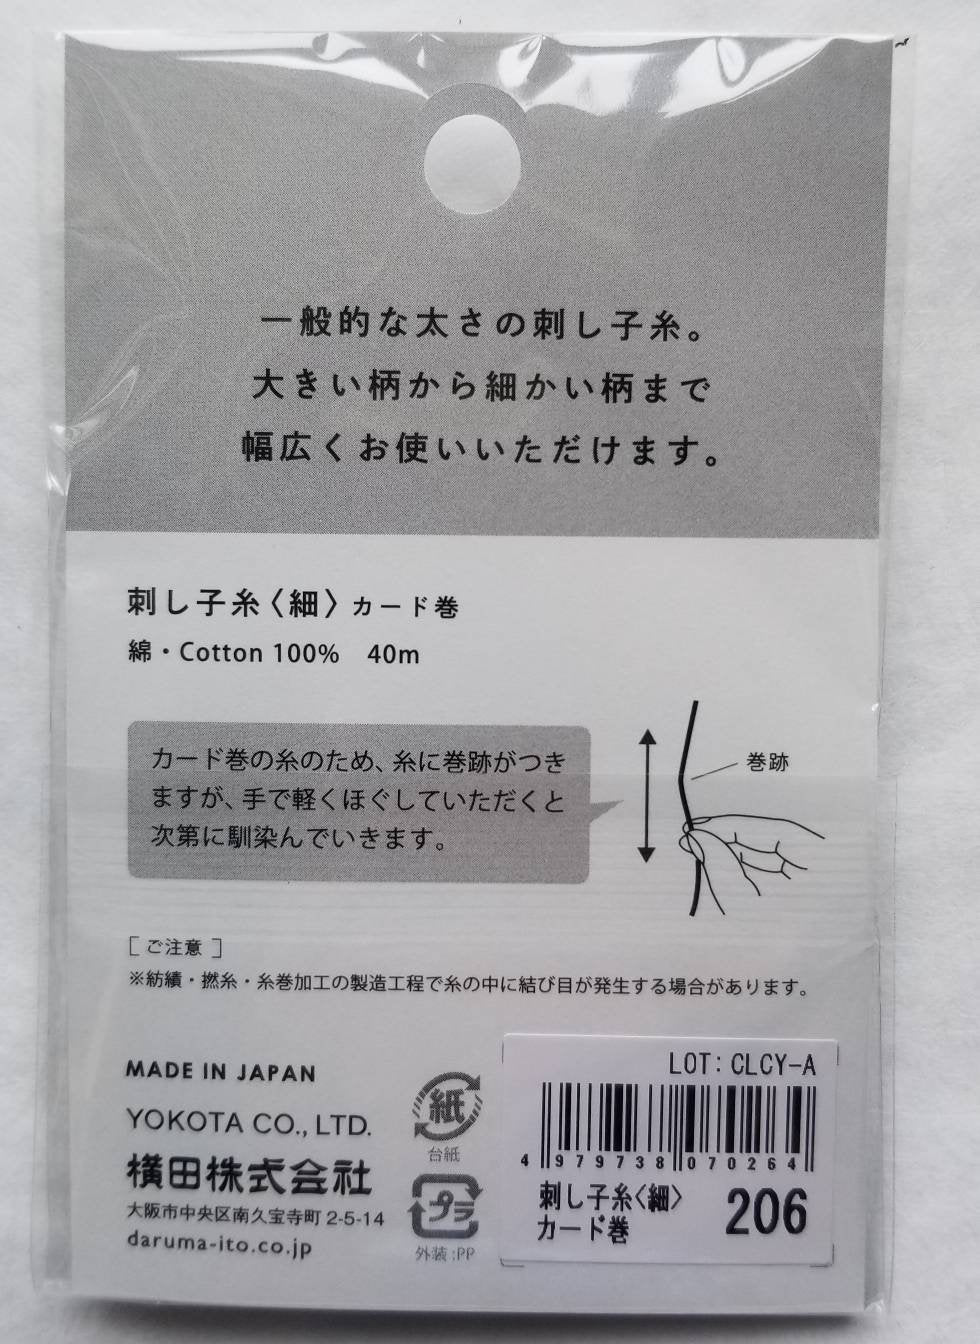 Daruma #206 MINT Japanese Cotton SASHIKO thread 40 meter card 20/4